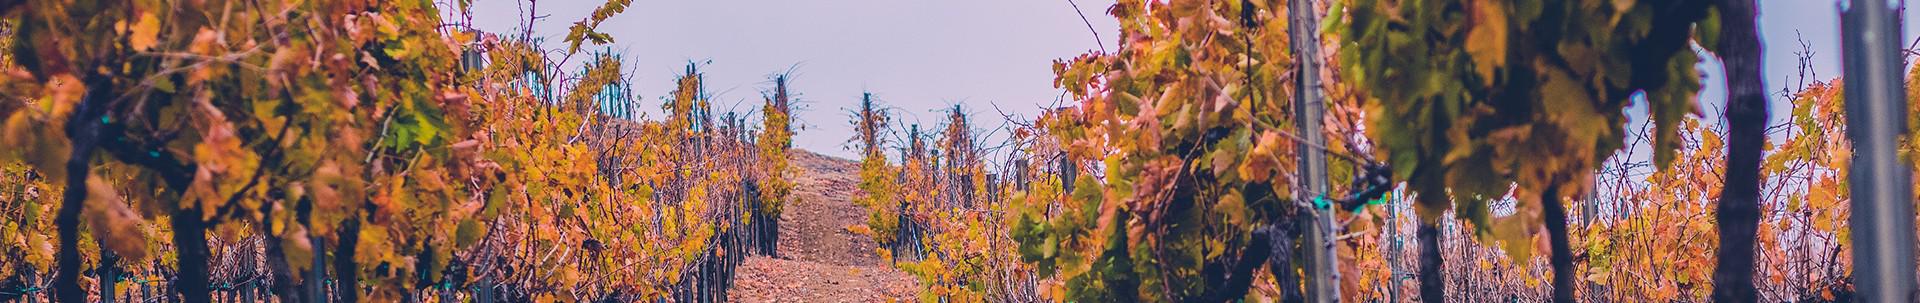 Fall vineyards in Santa Ynez Vineyards